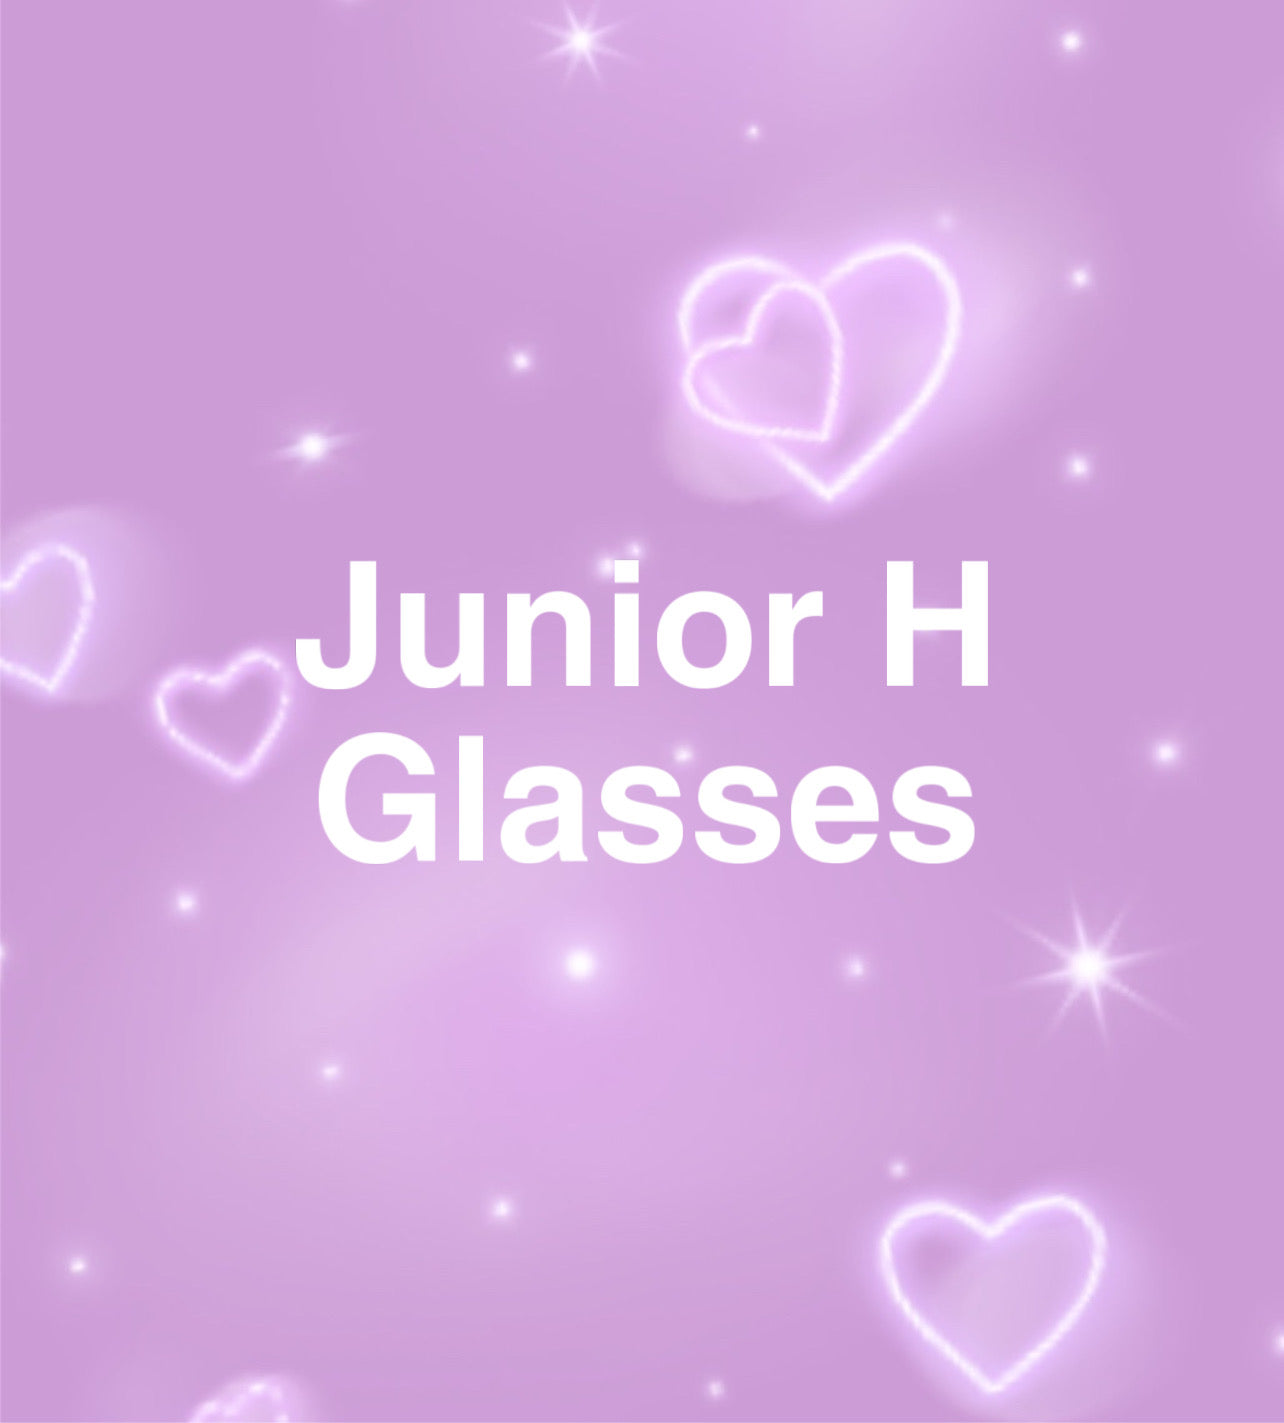 Juniro H Glasses